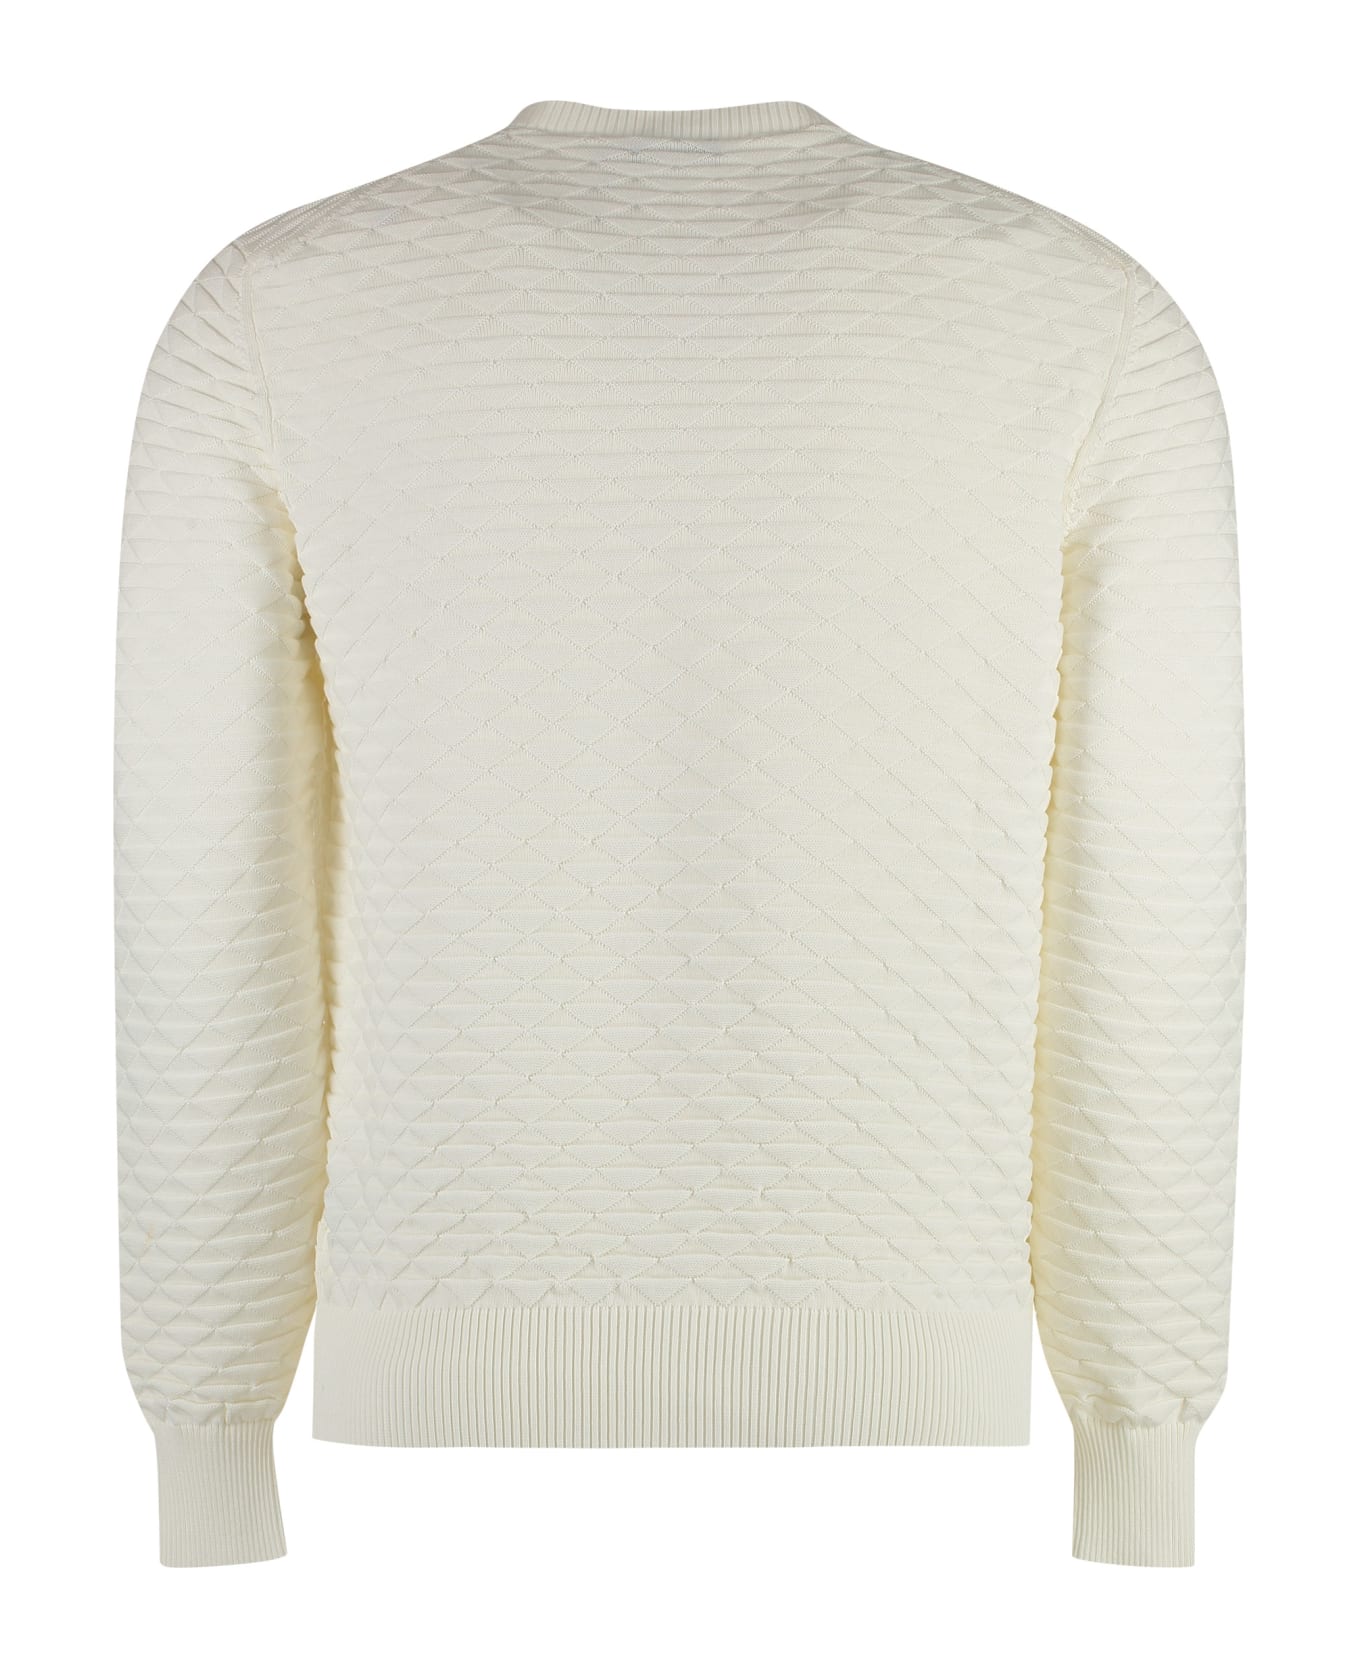 Drumohr Cotton Crew-neck Sweater - White